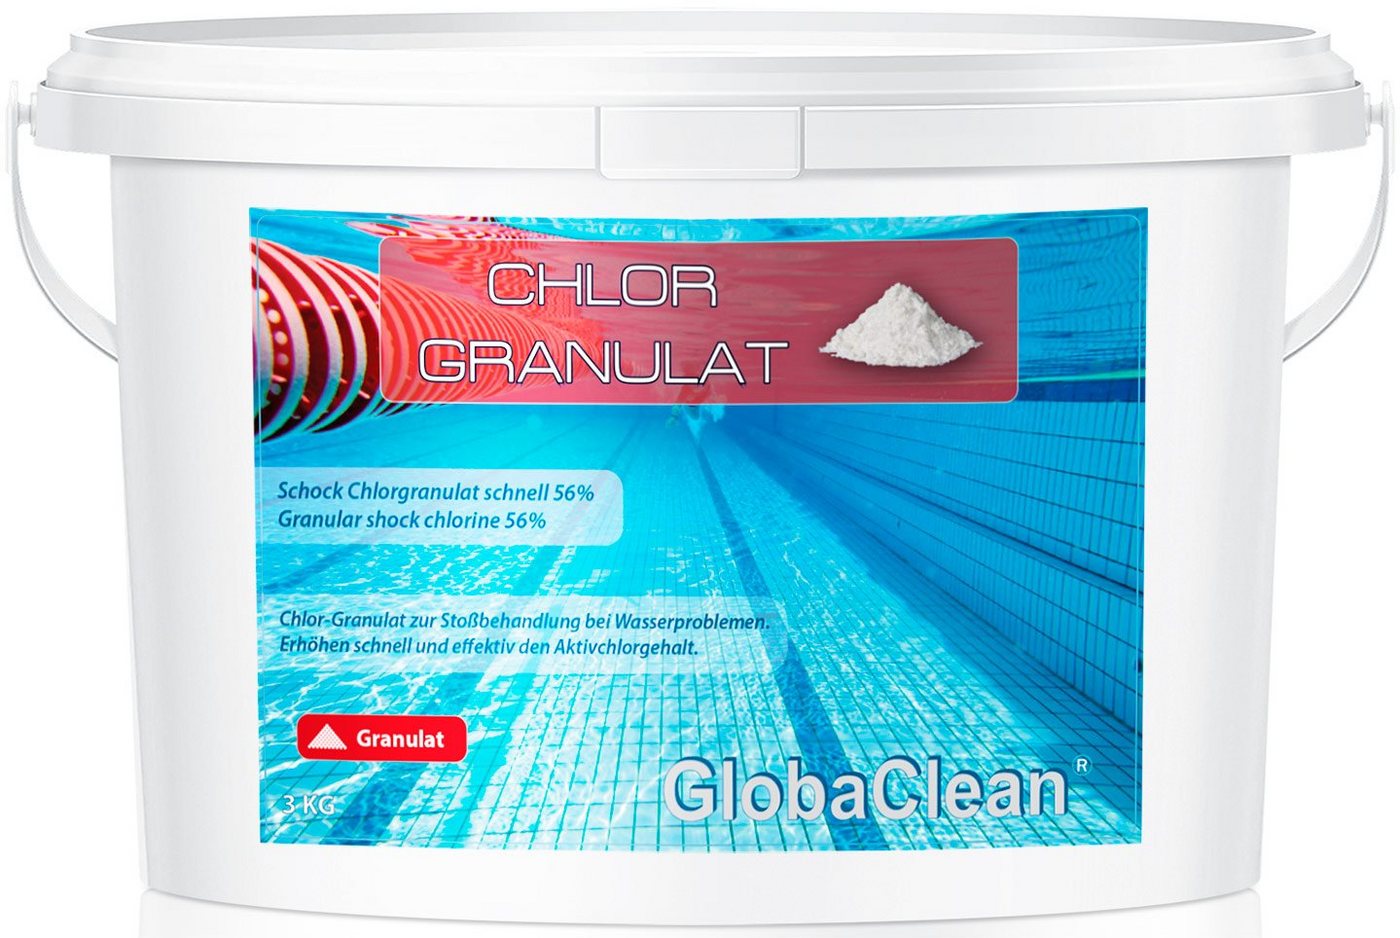 GlobaClean Chlorgranulat 3 kg Pool Schock Chlorgranulat von GlobaClean